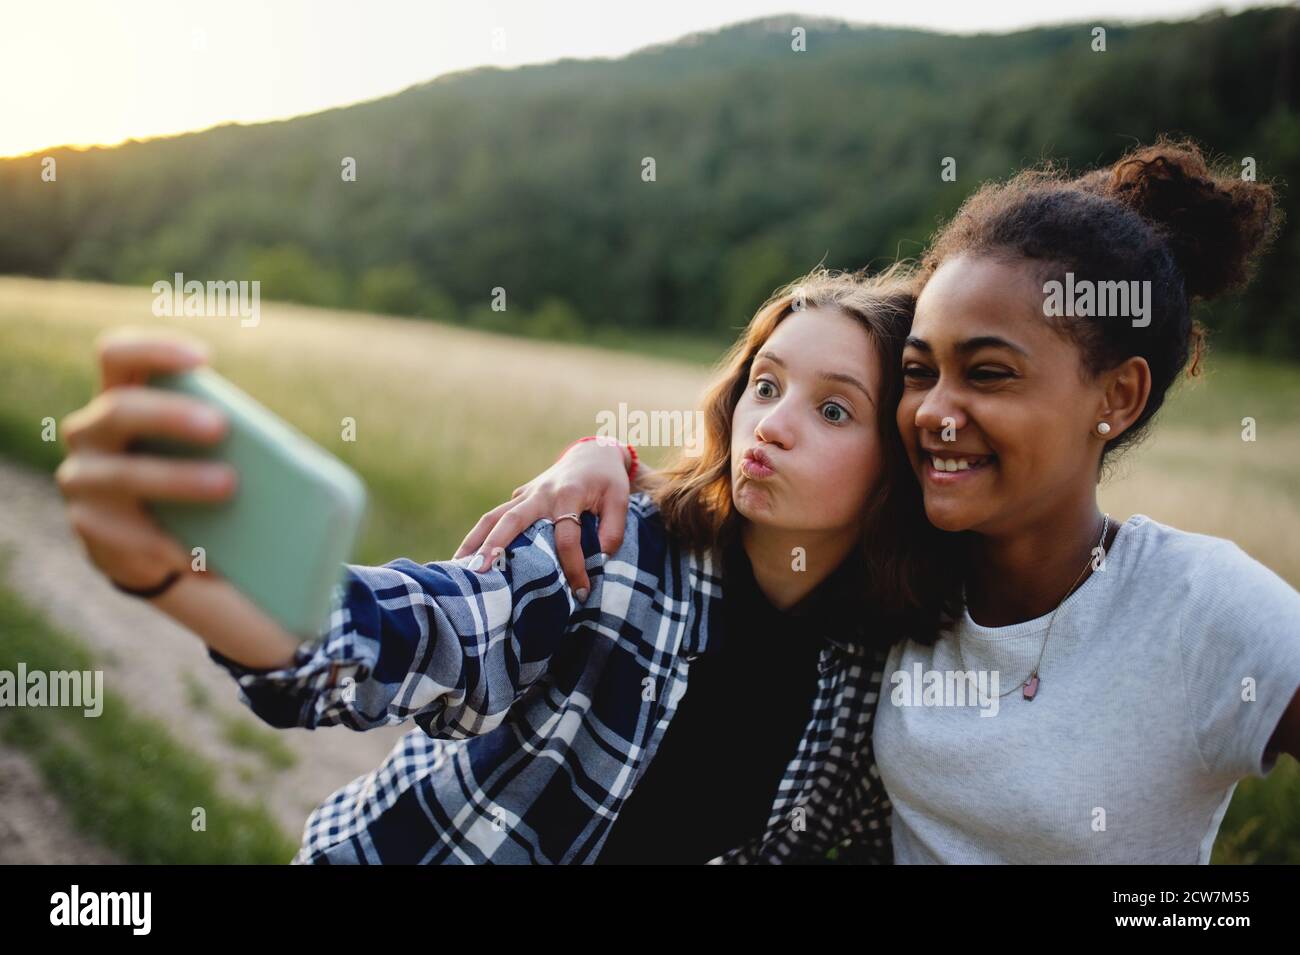 Amateur Selfie Pics Of High School Teens